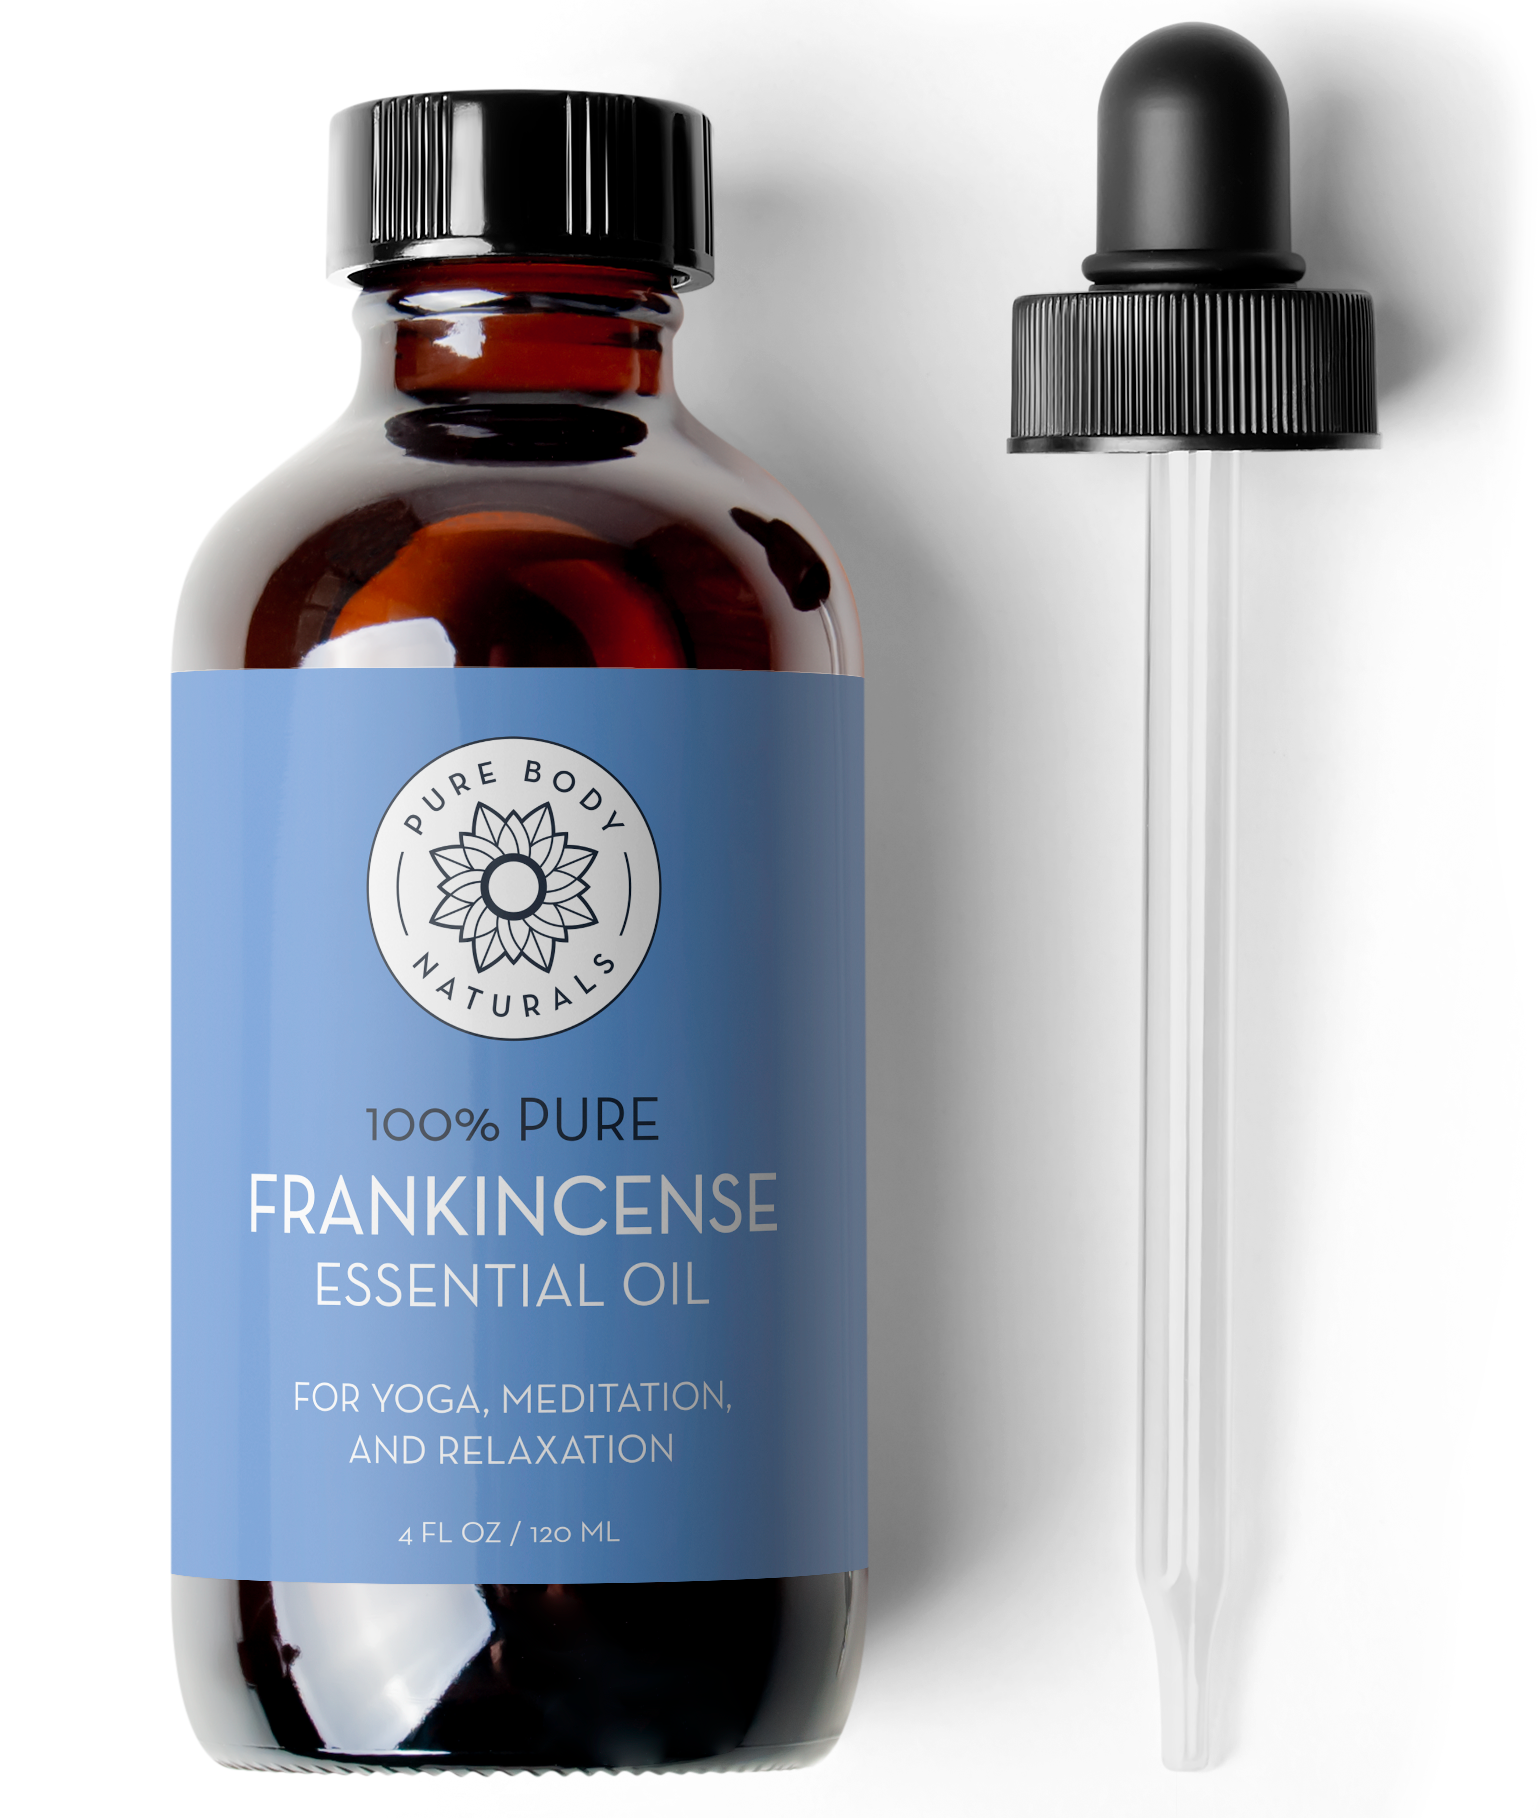 Six Great Organic Frankincense Oil Benefits